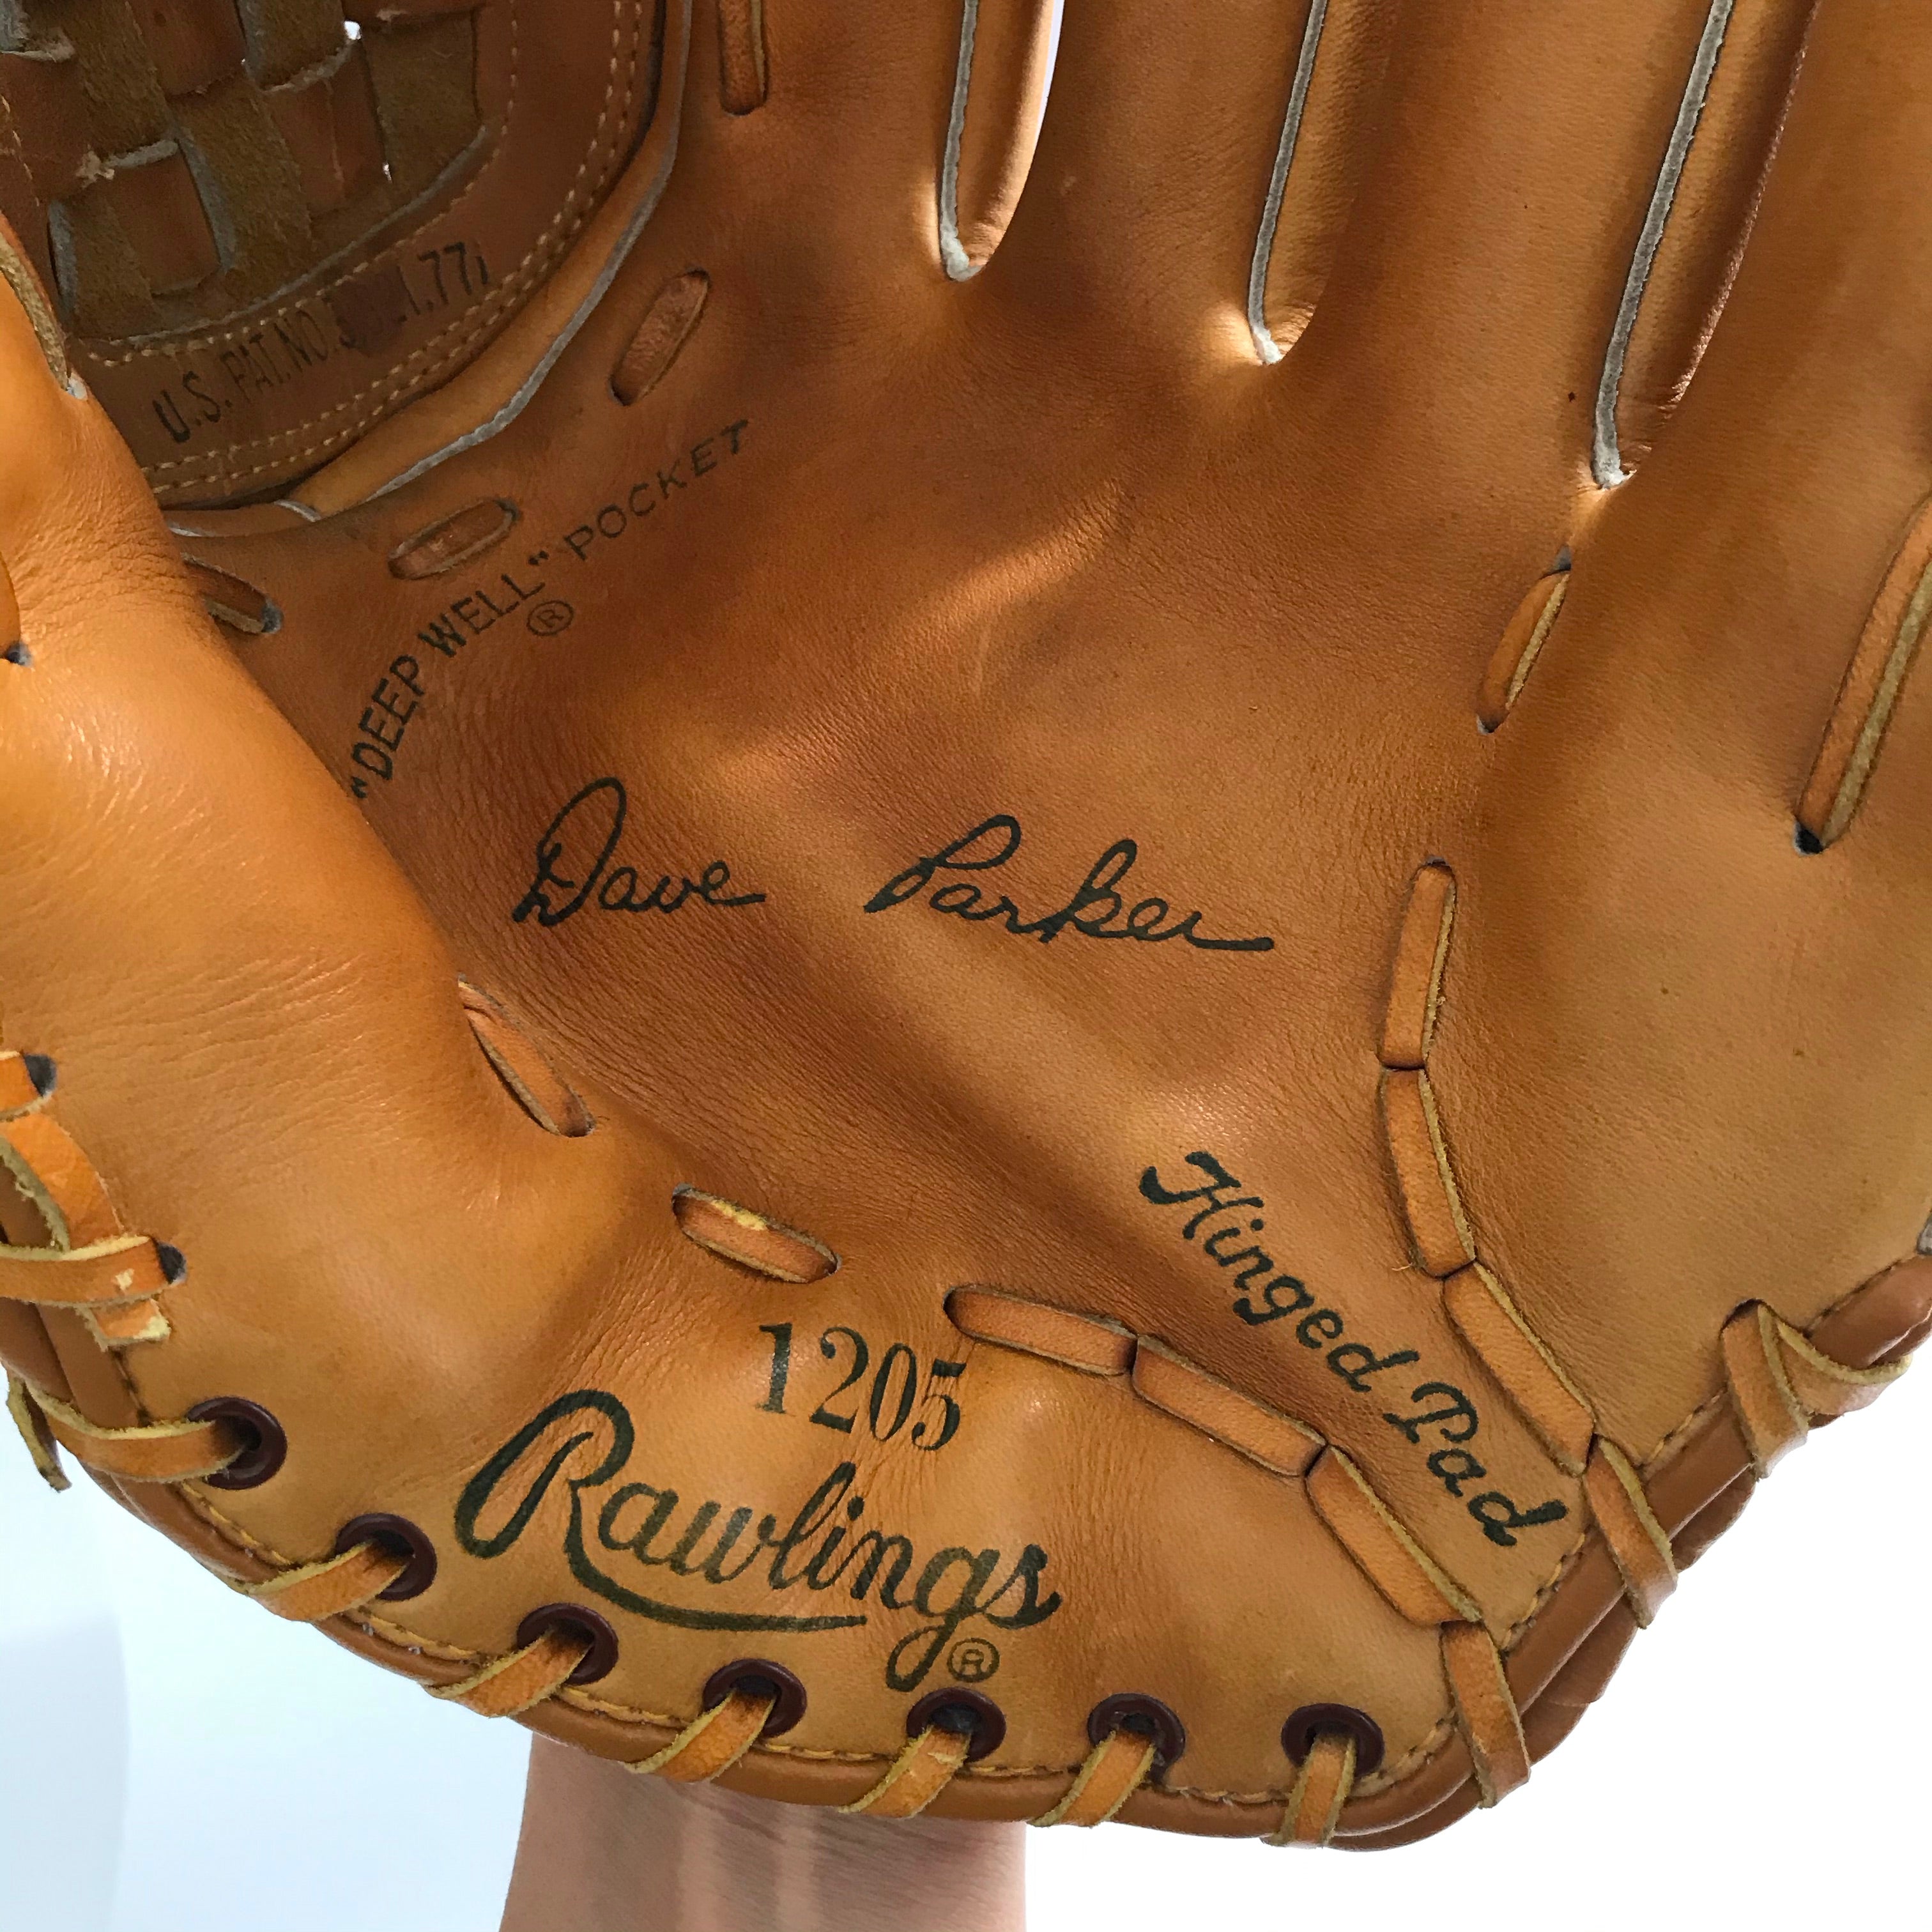 Rawlings Dave Parker RBG60 12” Baseball Softball Glove Right Hand Throw